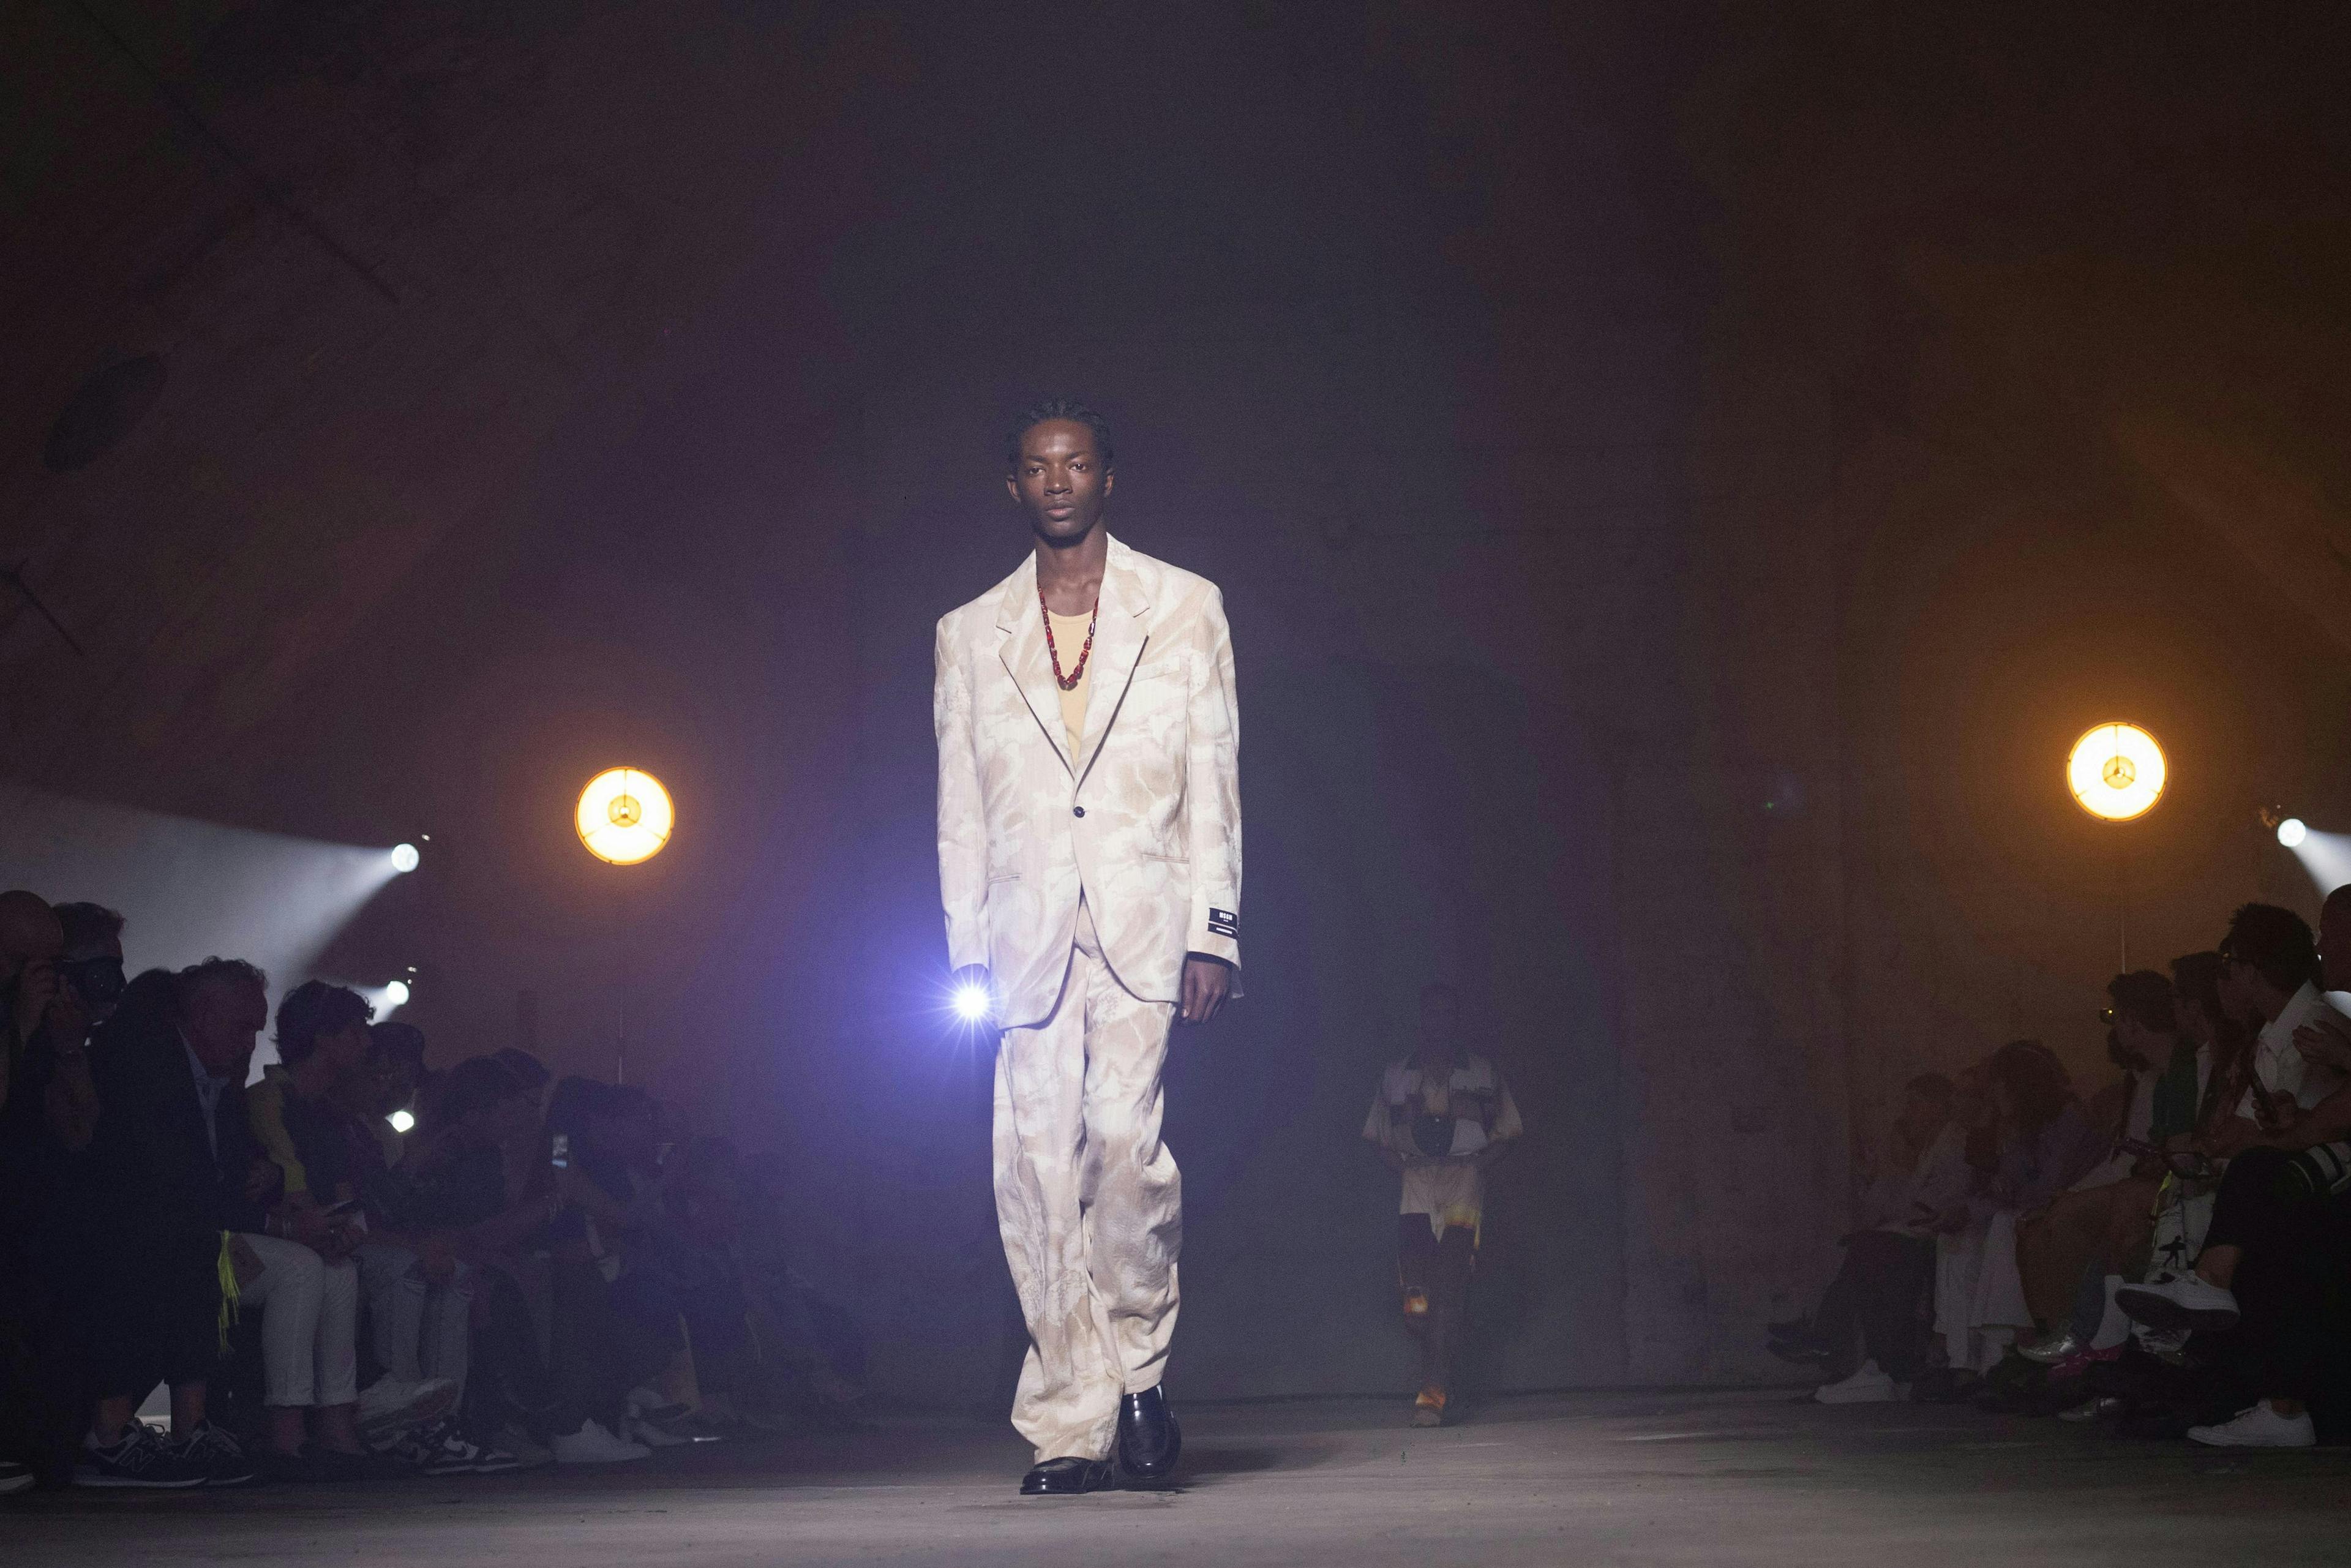 milan fashion formal wear suit lighting adult male man person shoe necklace